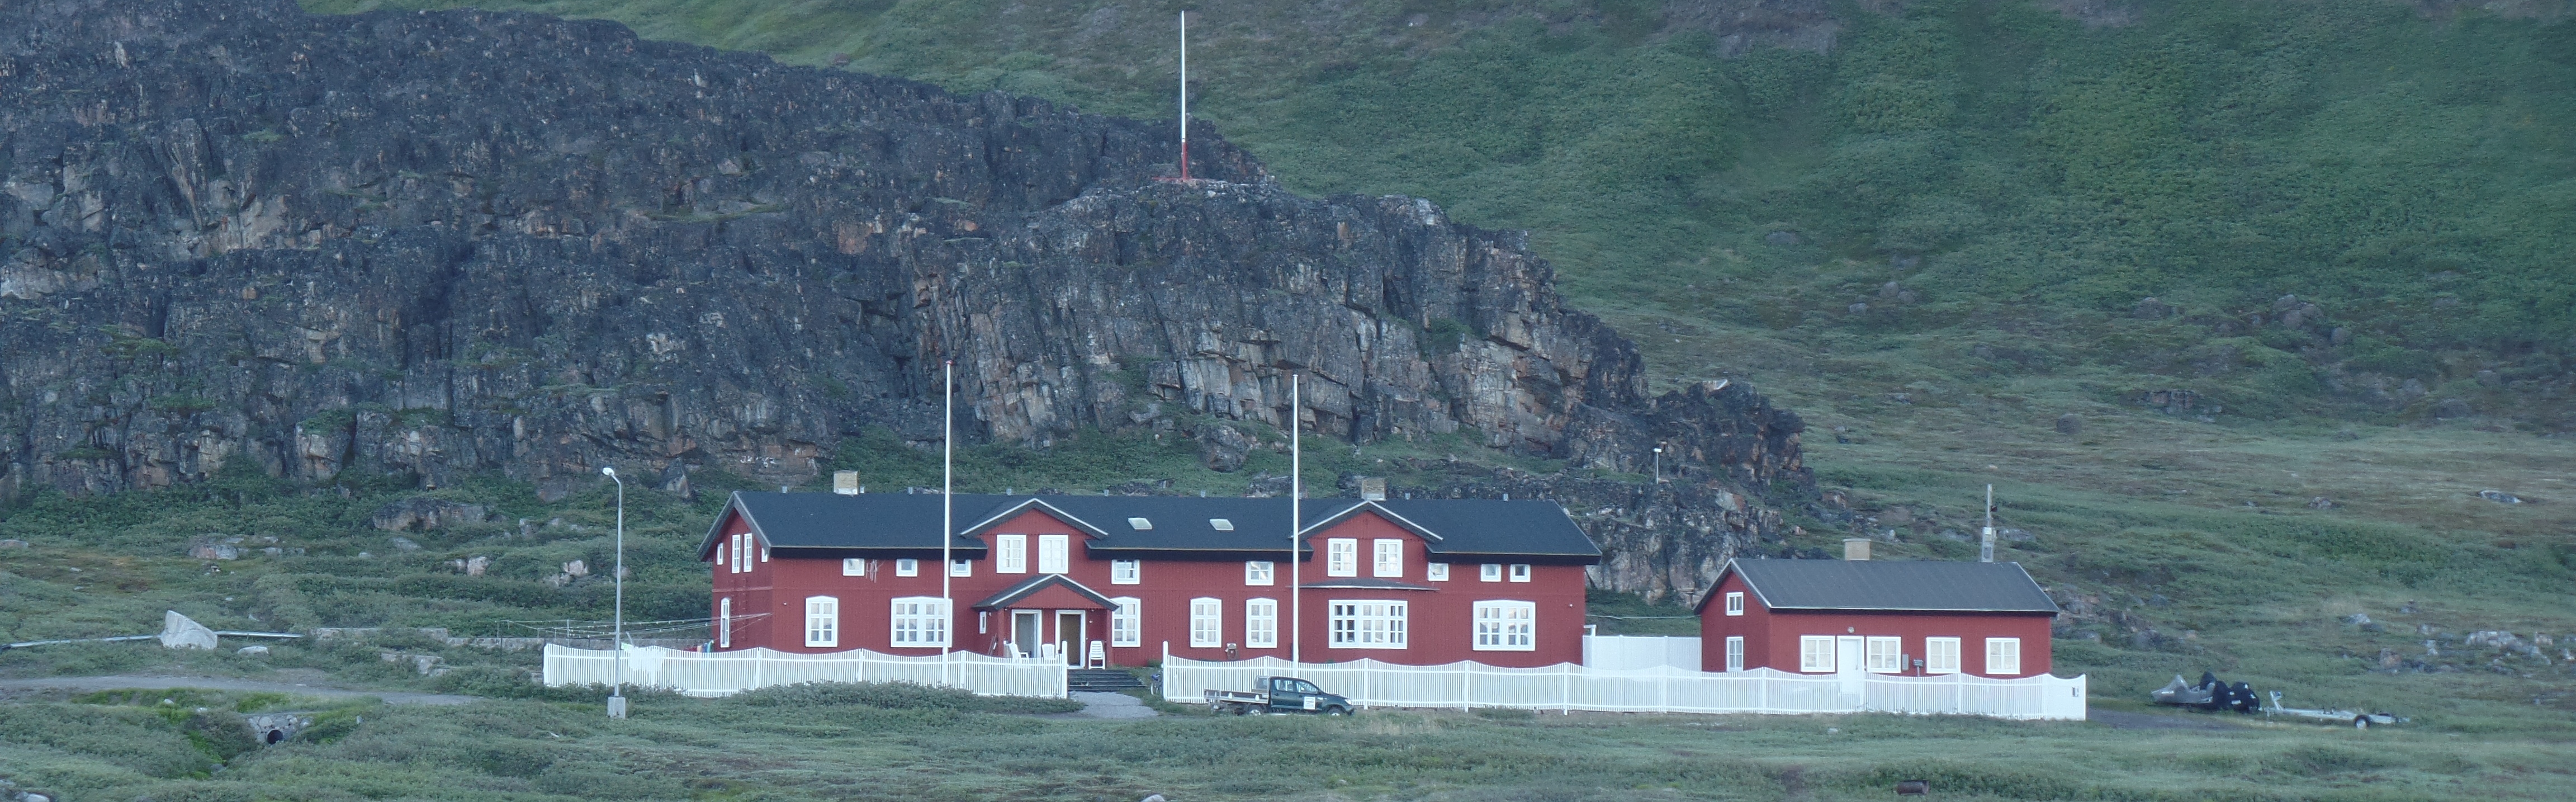 Zackenberg Research Site, Greenland